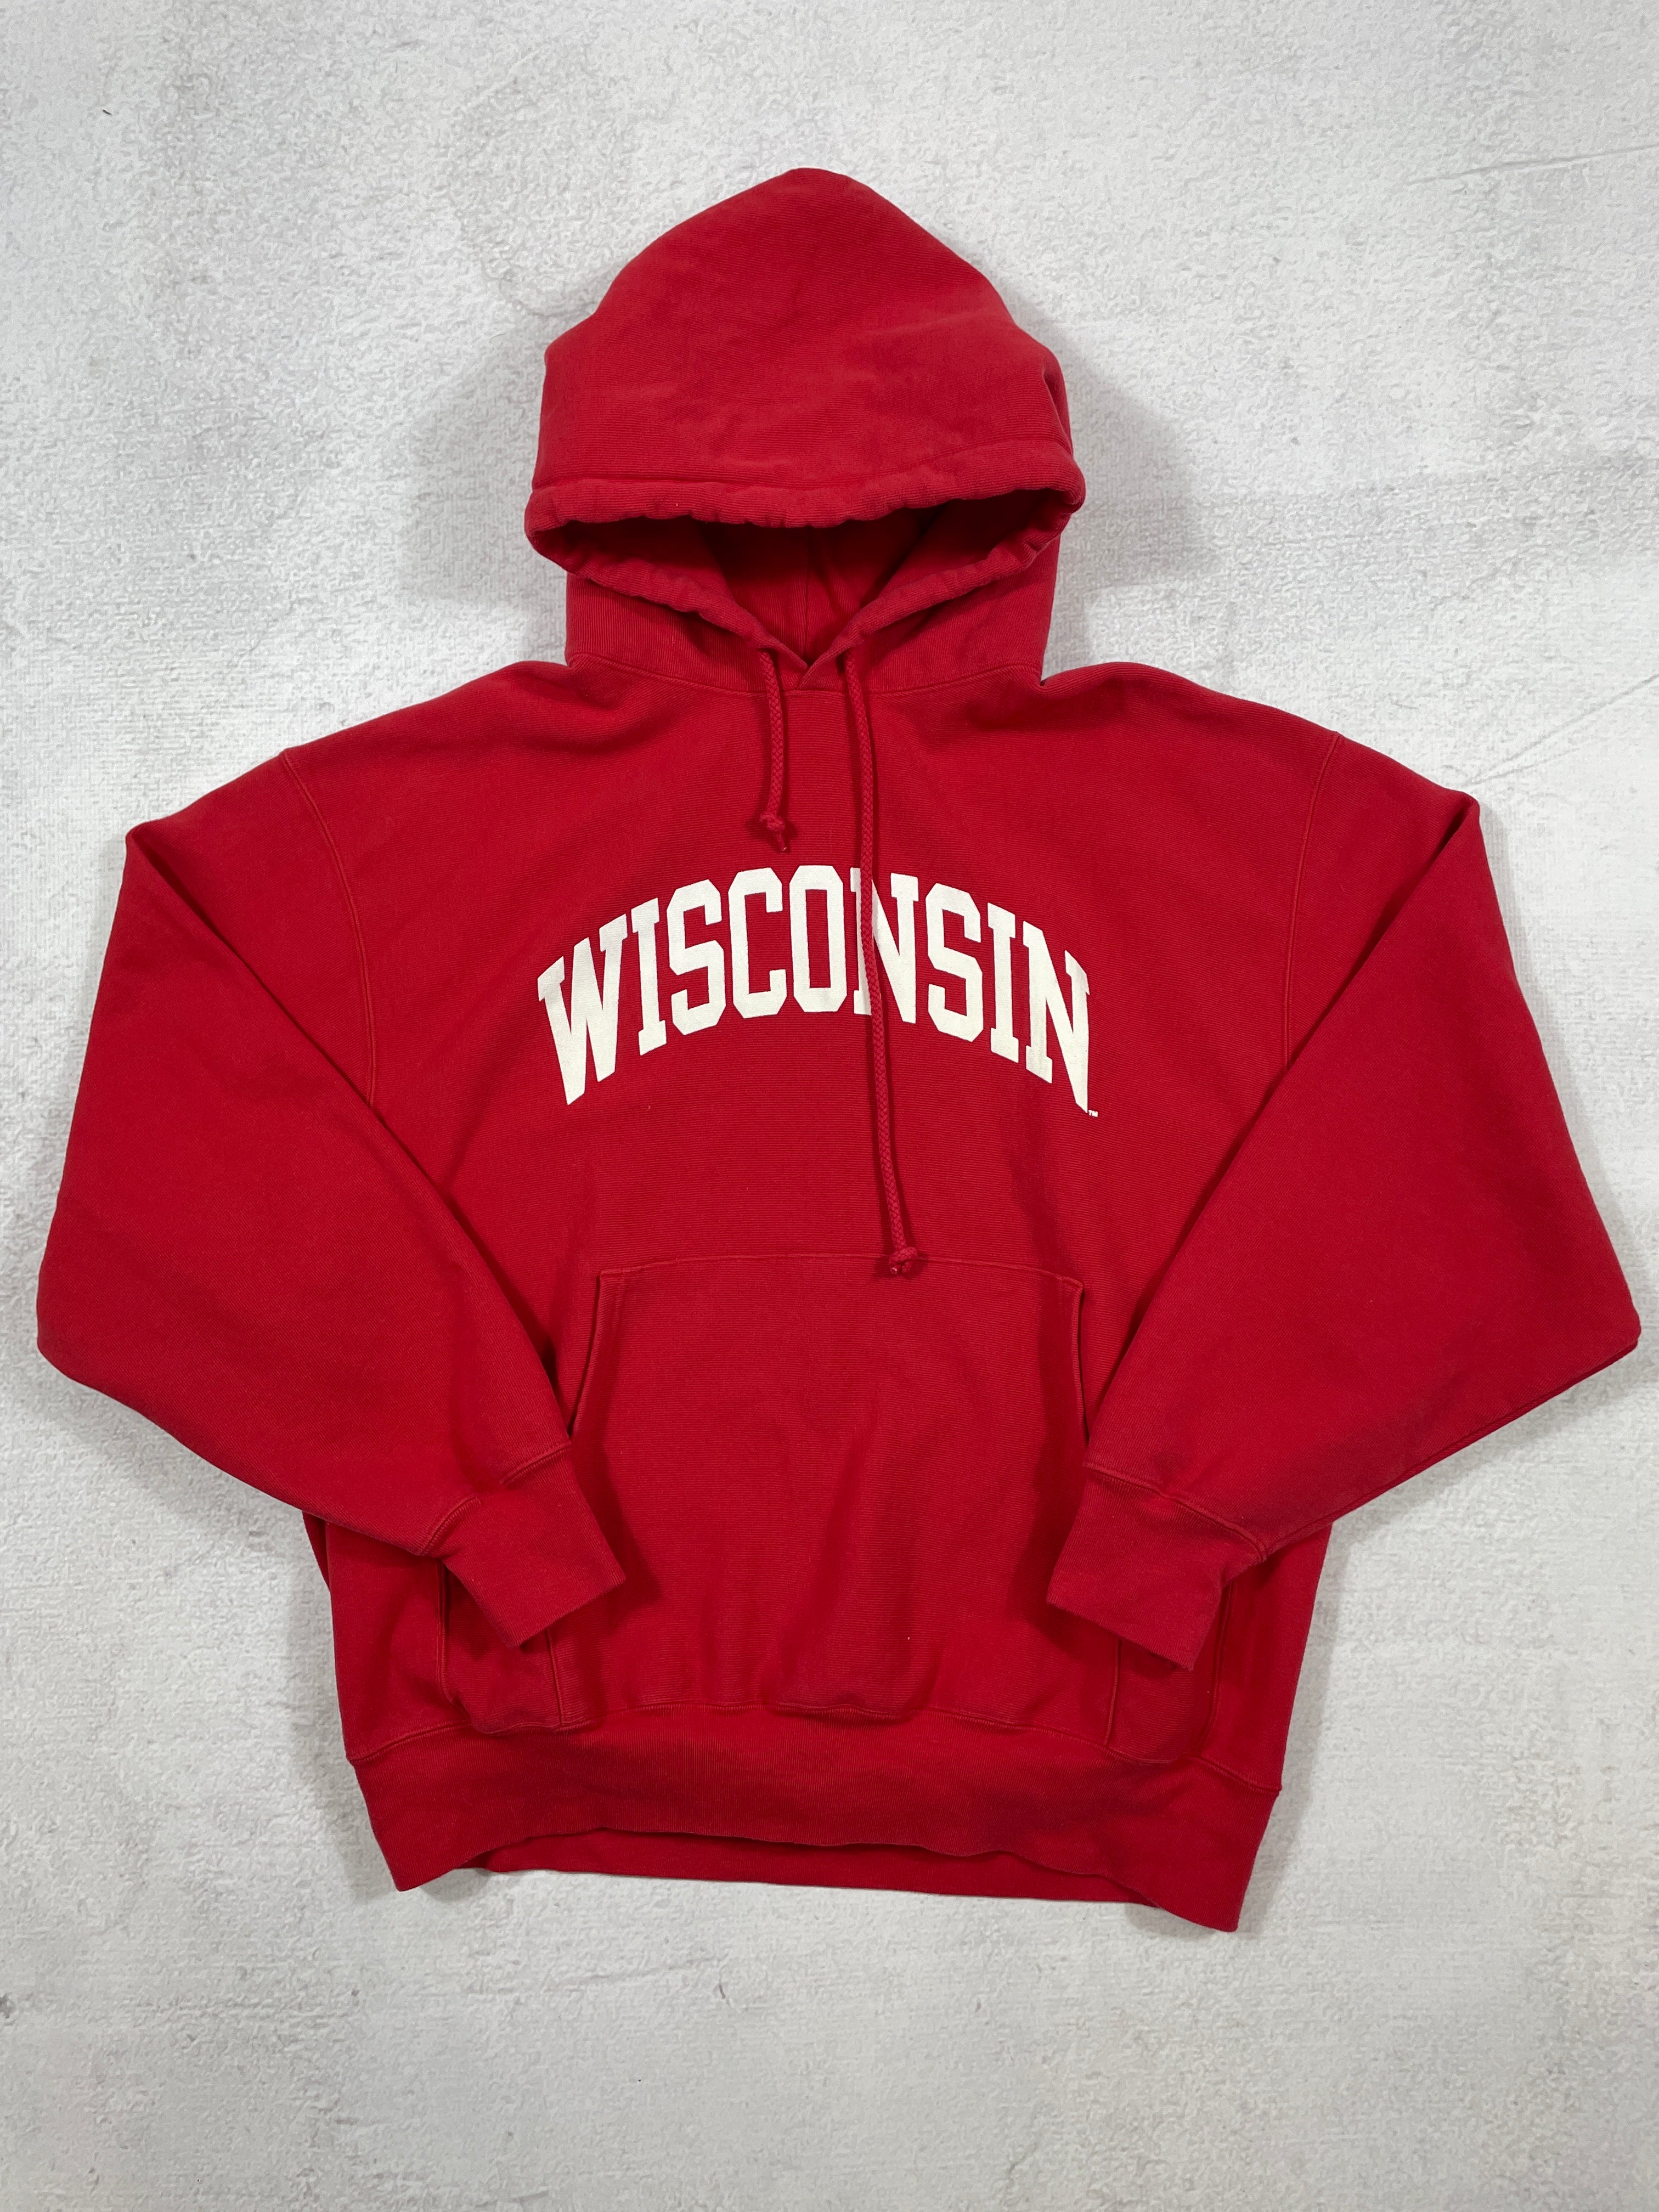 Vintage Champion Wisconsin Reverse Weave Hoodie - Men's XL